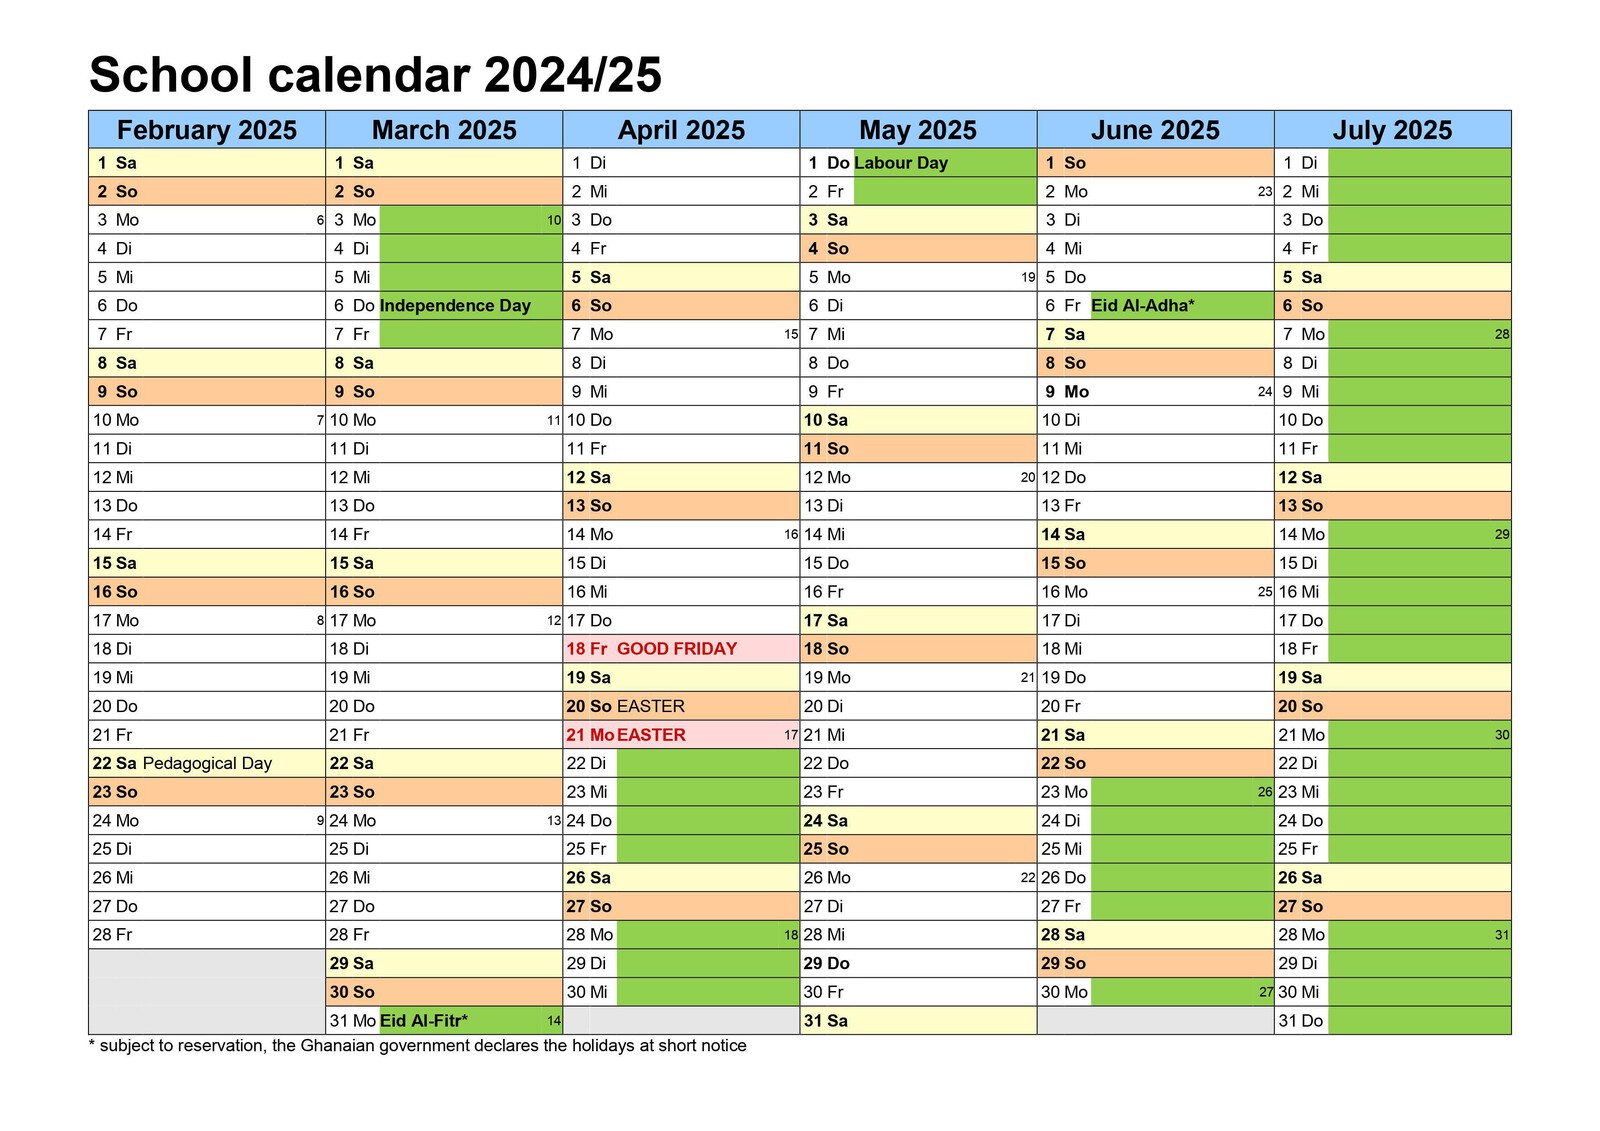 School calendar 2024 2025 images 2